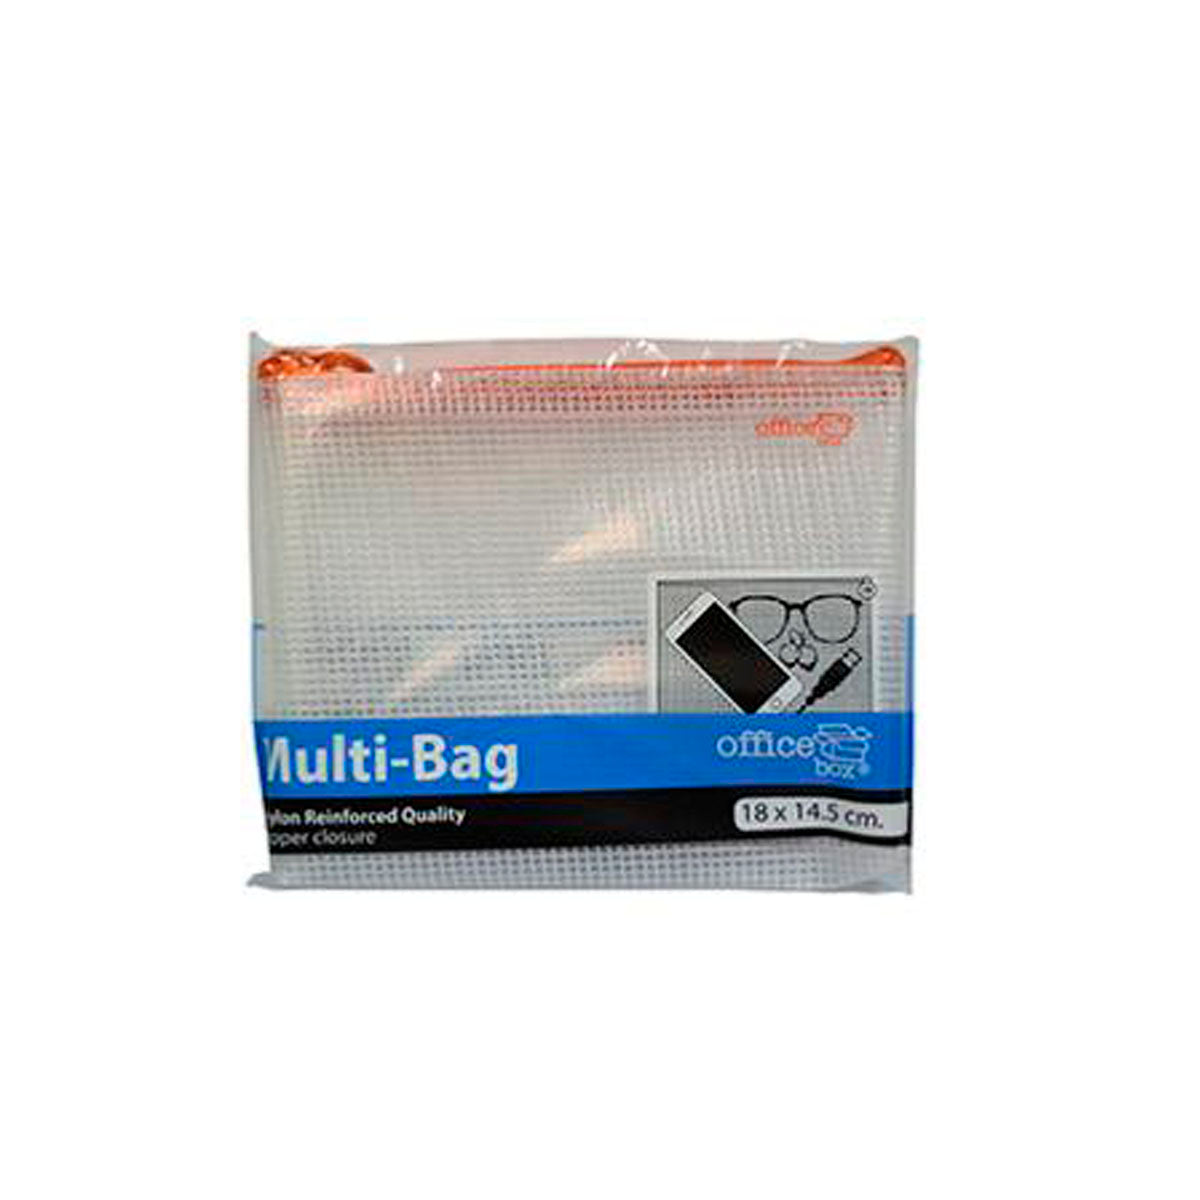 Office Box - Bolsa Multiusos Multi Bag A6+ Transparente con Cierre de Cremallera